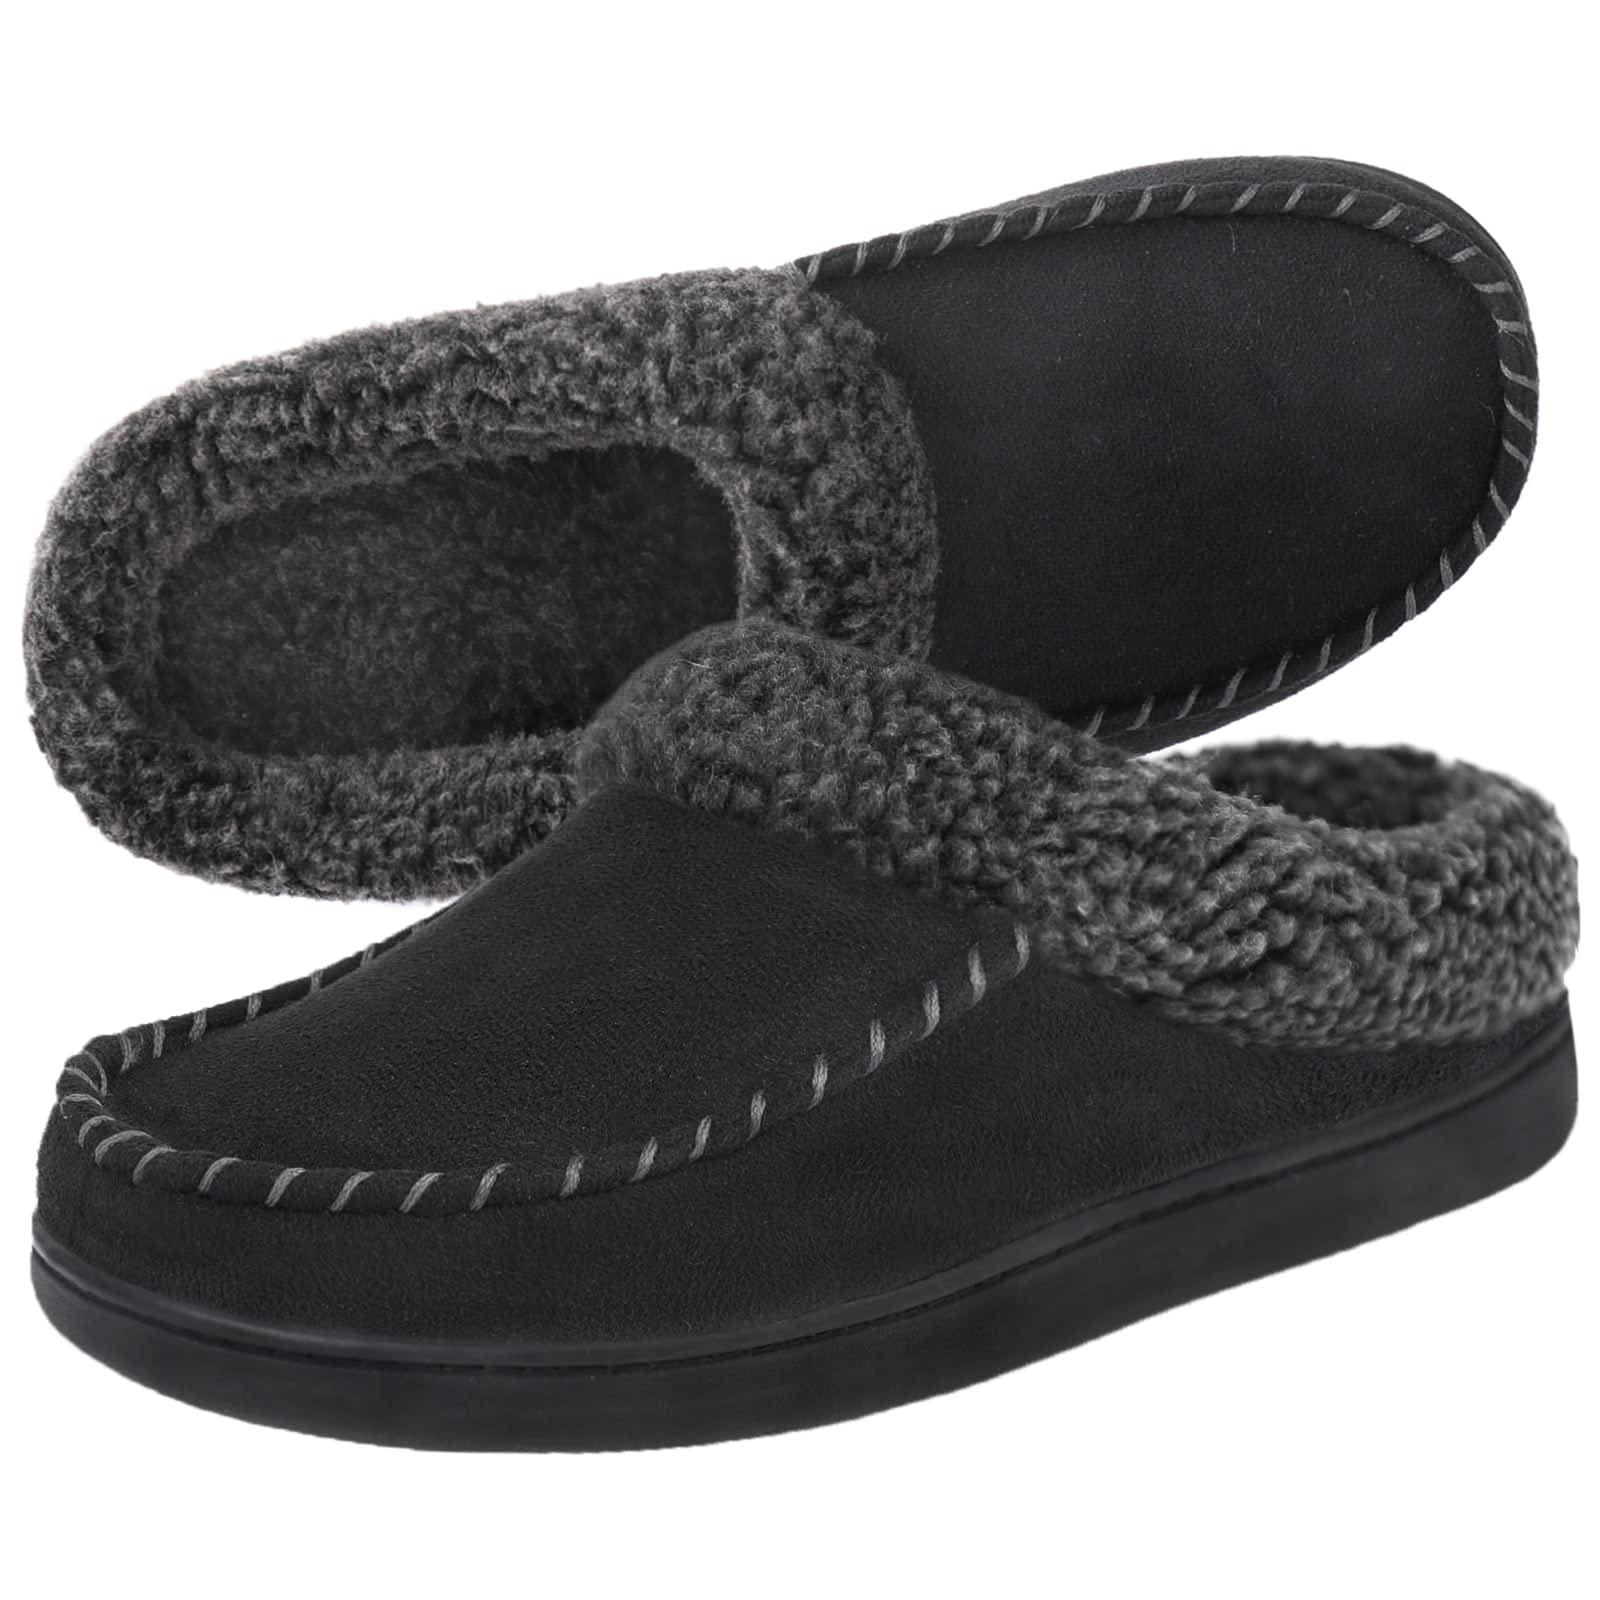 ULTRAIDEAS Men's Nealon Moccasin Clog Slipper, Slip on Indoor/Outdoor House Shoes